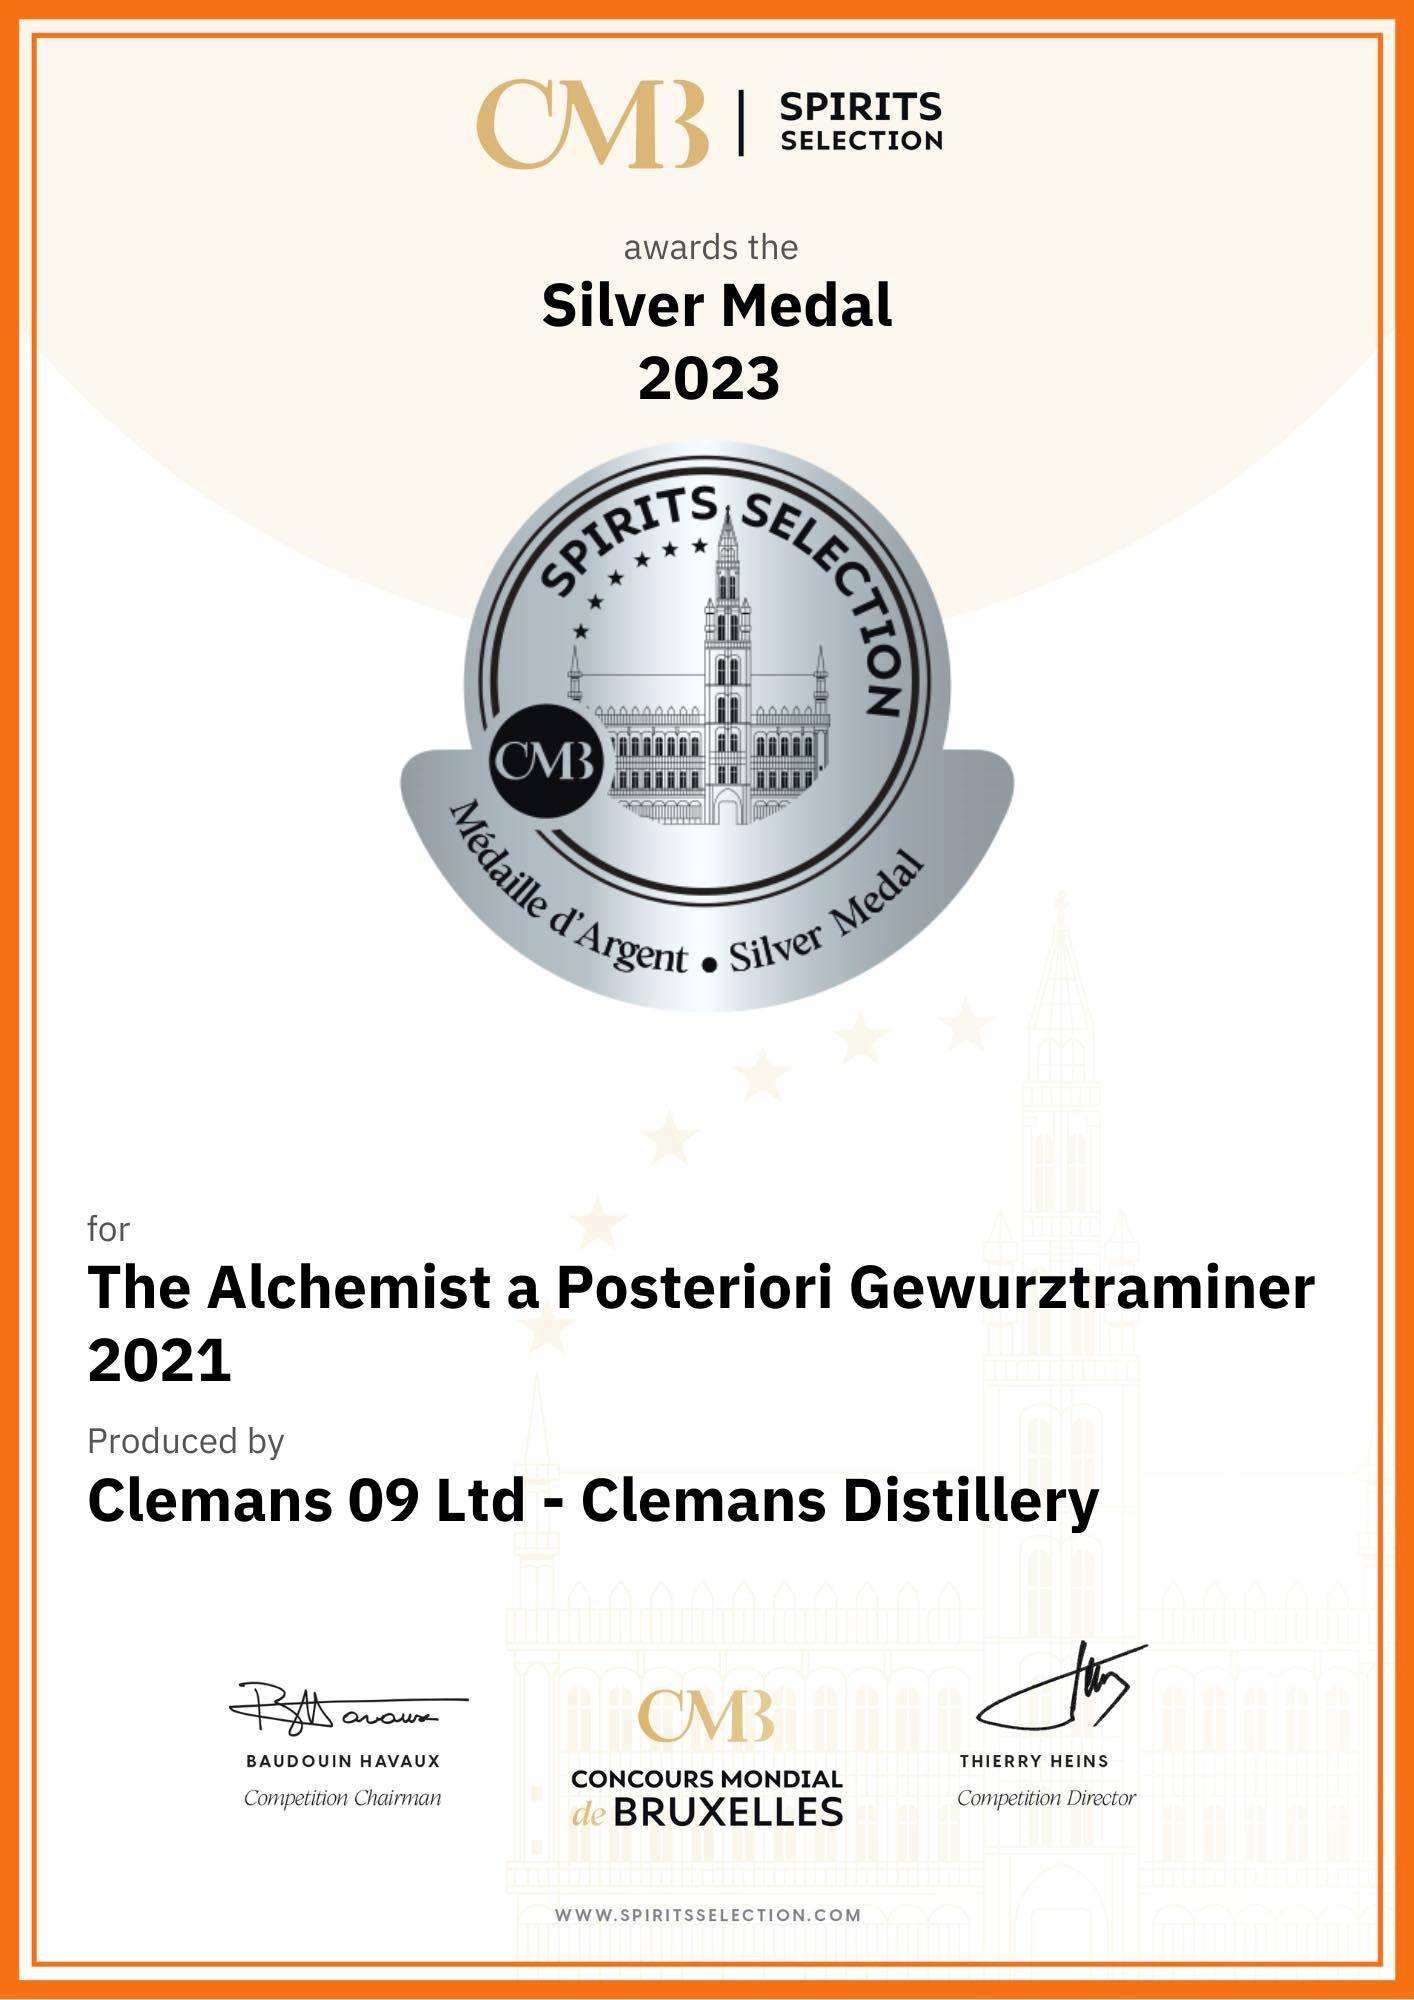 Clemans Distillery - Горна Бешовица със сребърен медал от Spirits Selection 2023 